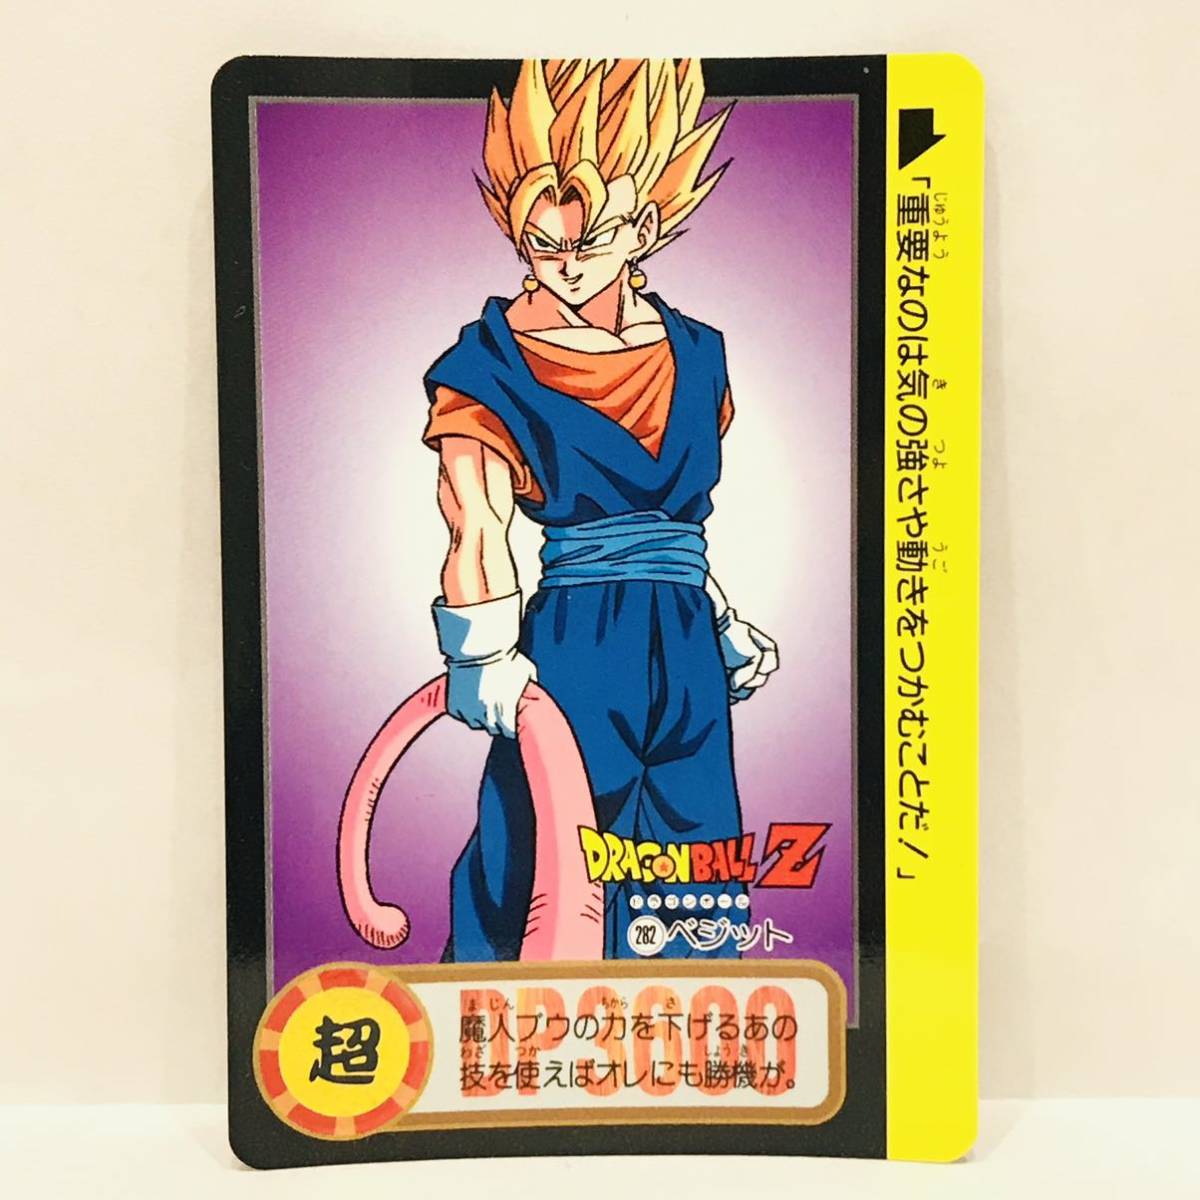  Carddas Dragon Ball Z. god bu compilation 282 (928)bejito②